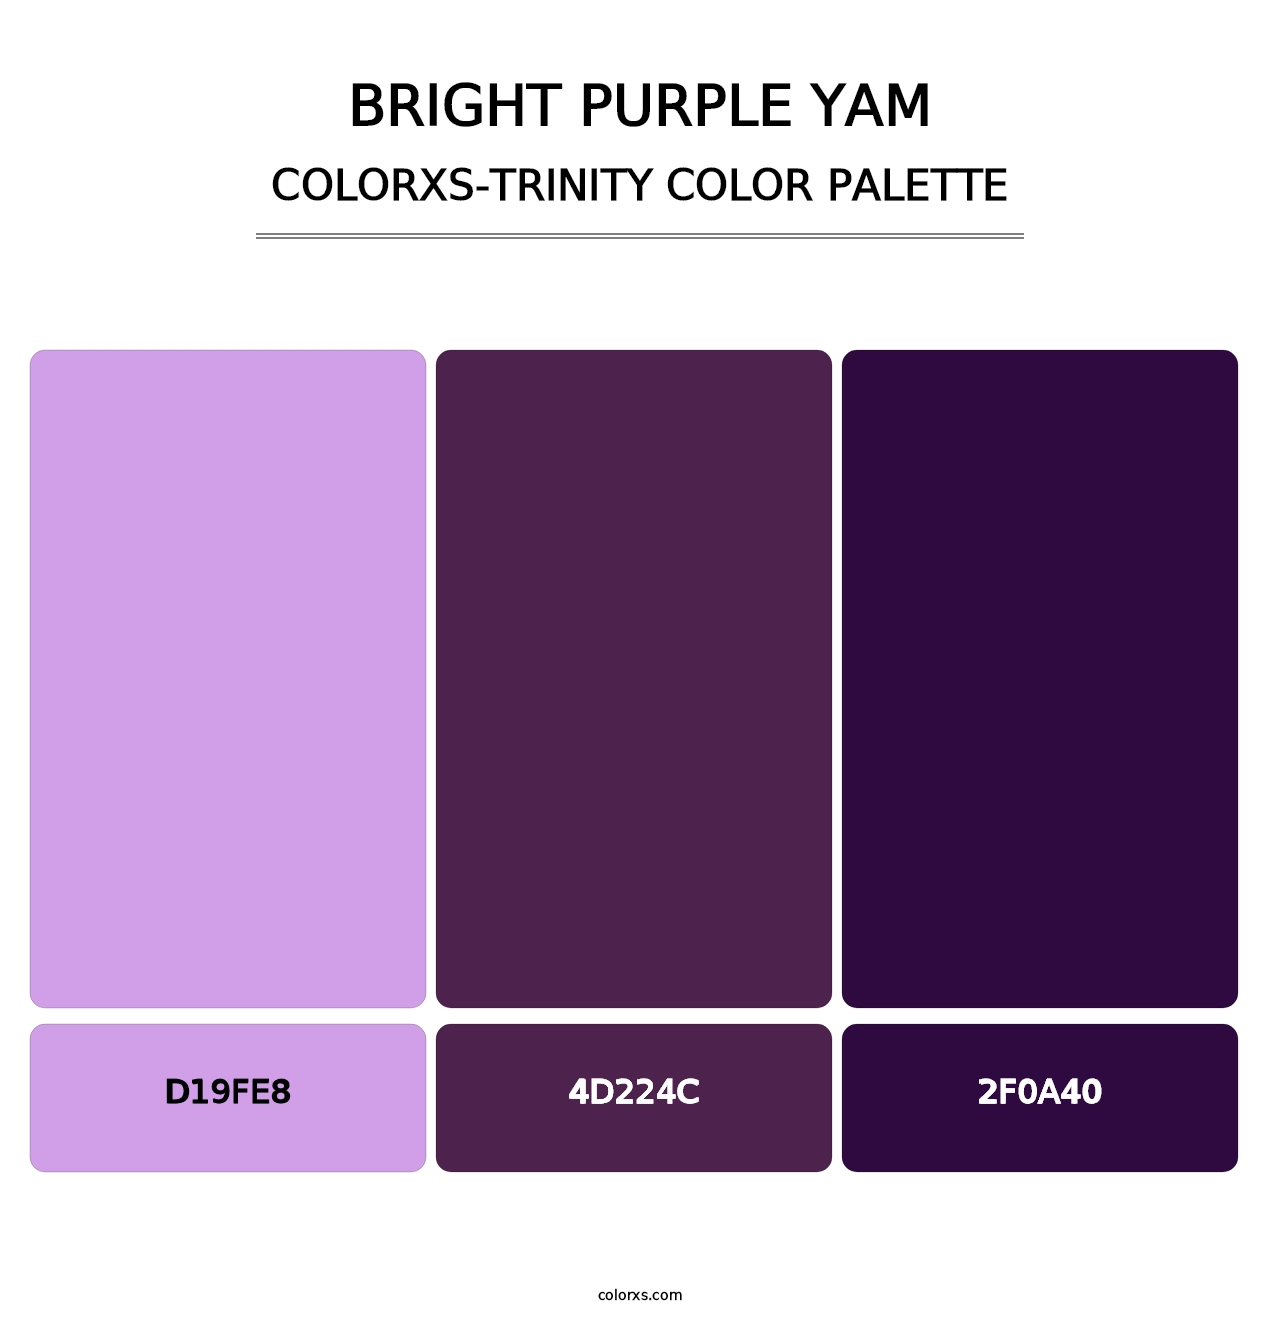 Bright Purple Yam - Colorxs Trinity Palette